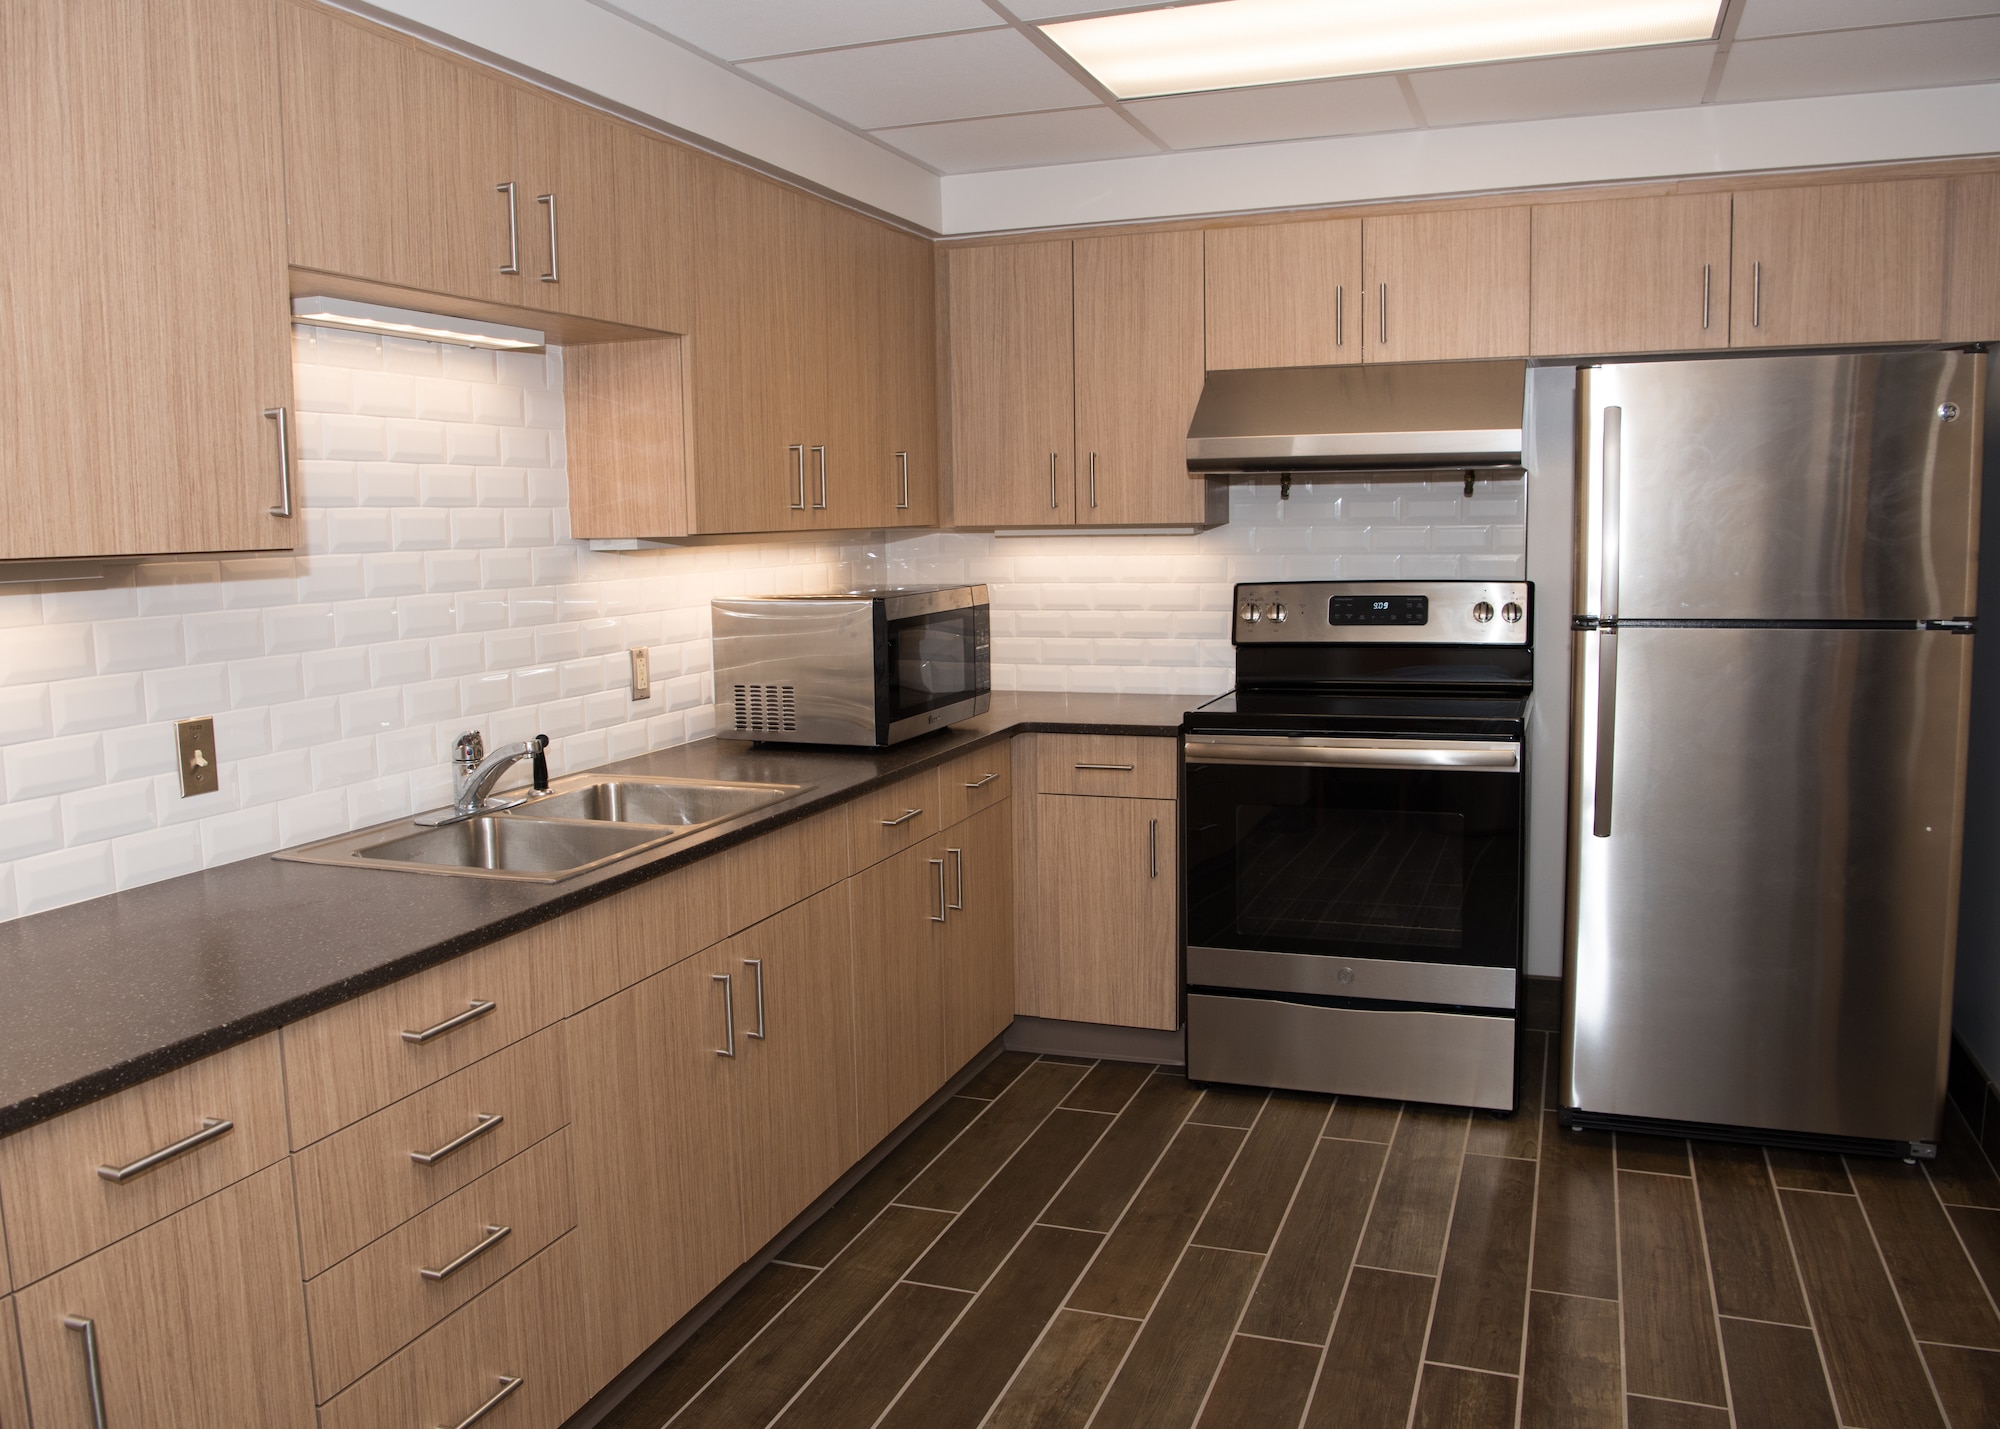 The newly renovated kitchen at the Atlantis Hall dormitory.